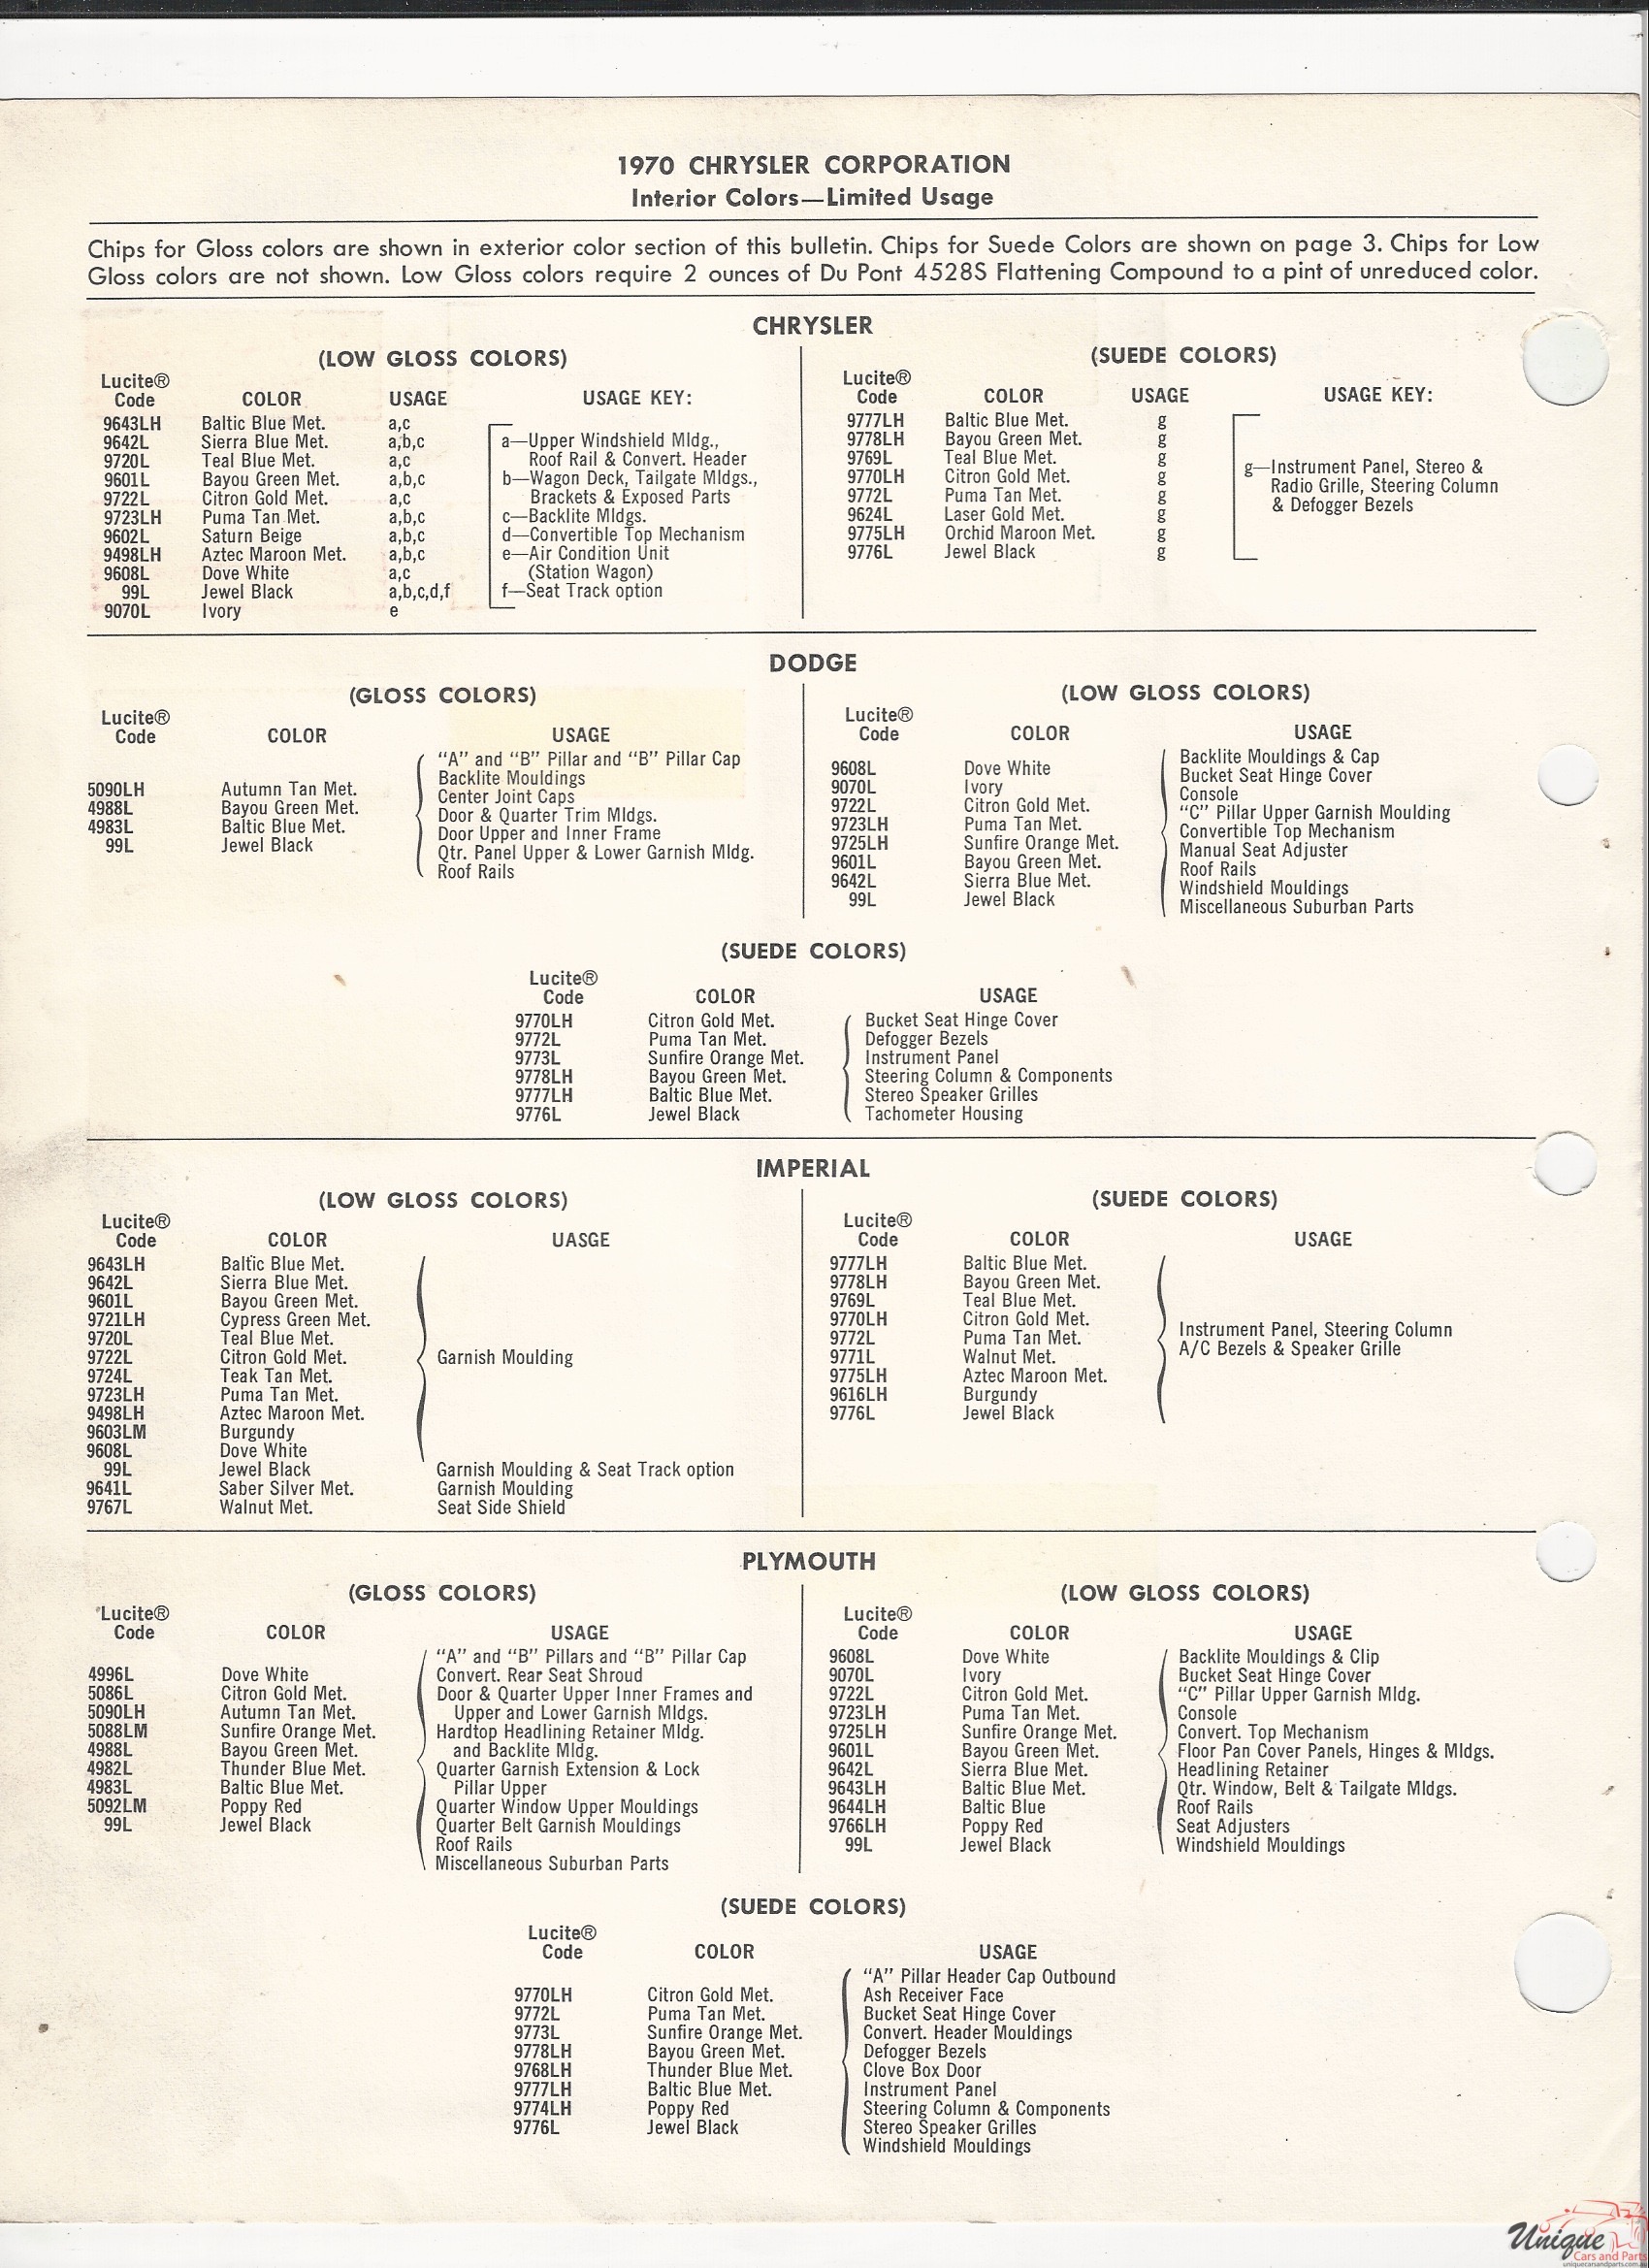 1970 Chrysler-2 Paint Charts